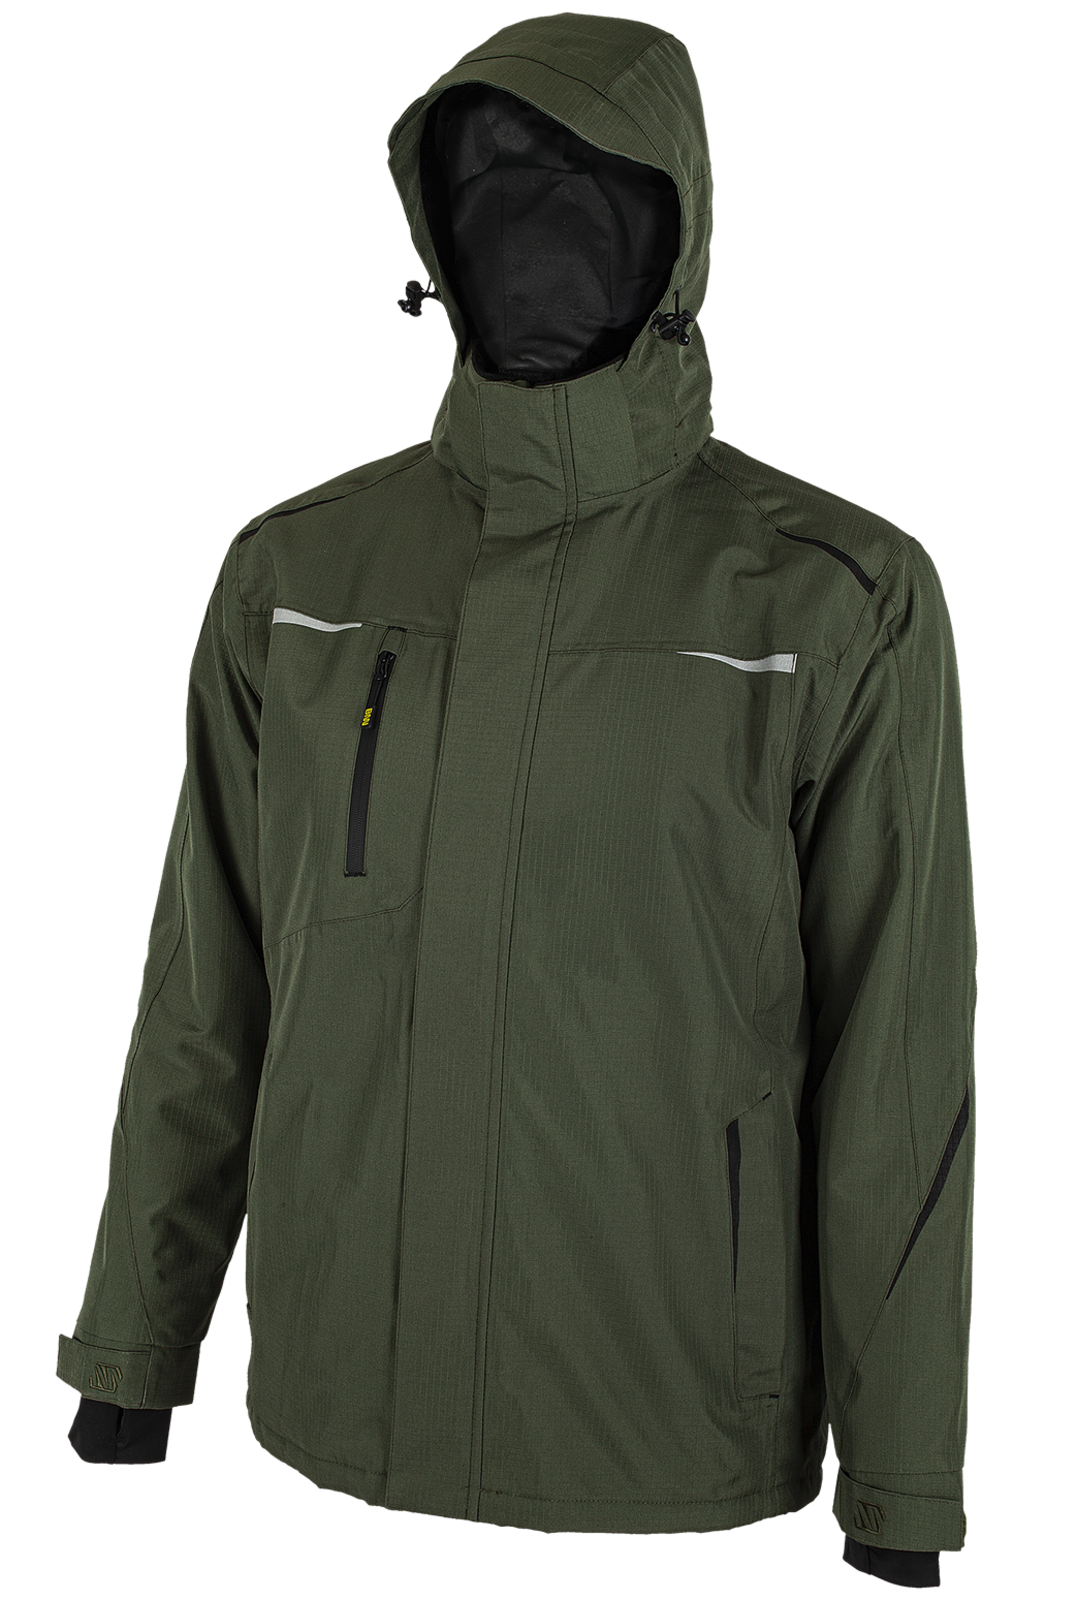 Zimná bunda Bennon Thoros - veľkosť: M, farba: khaki